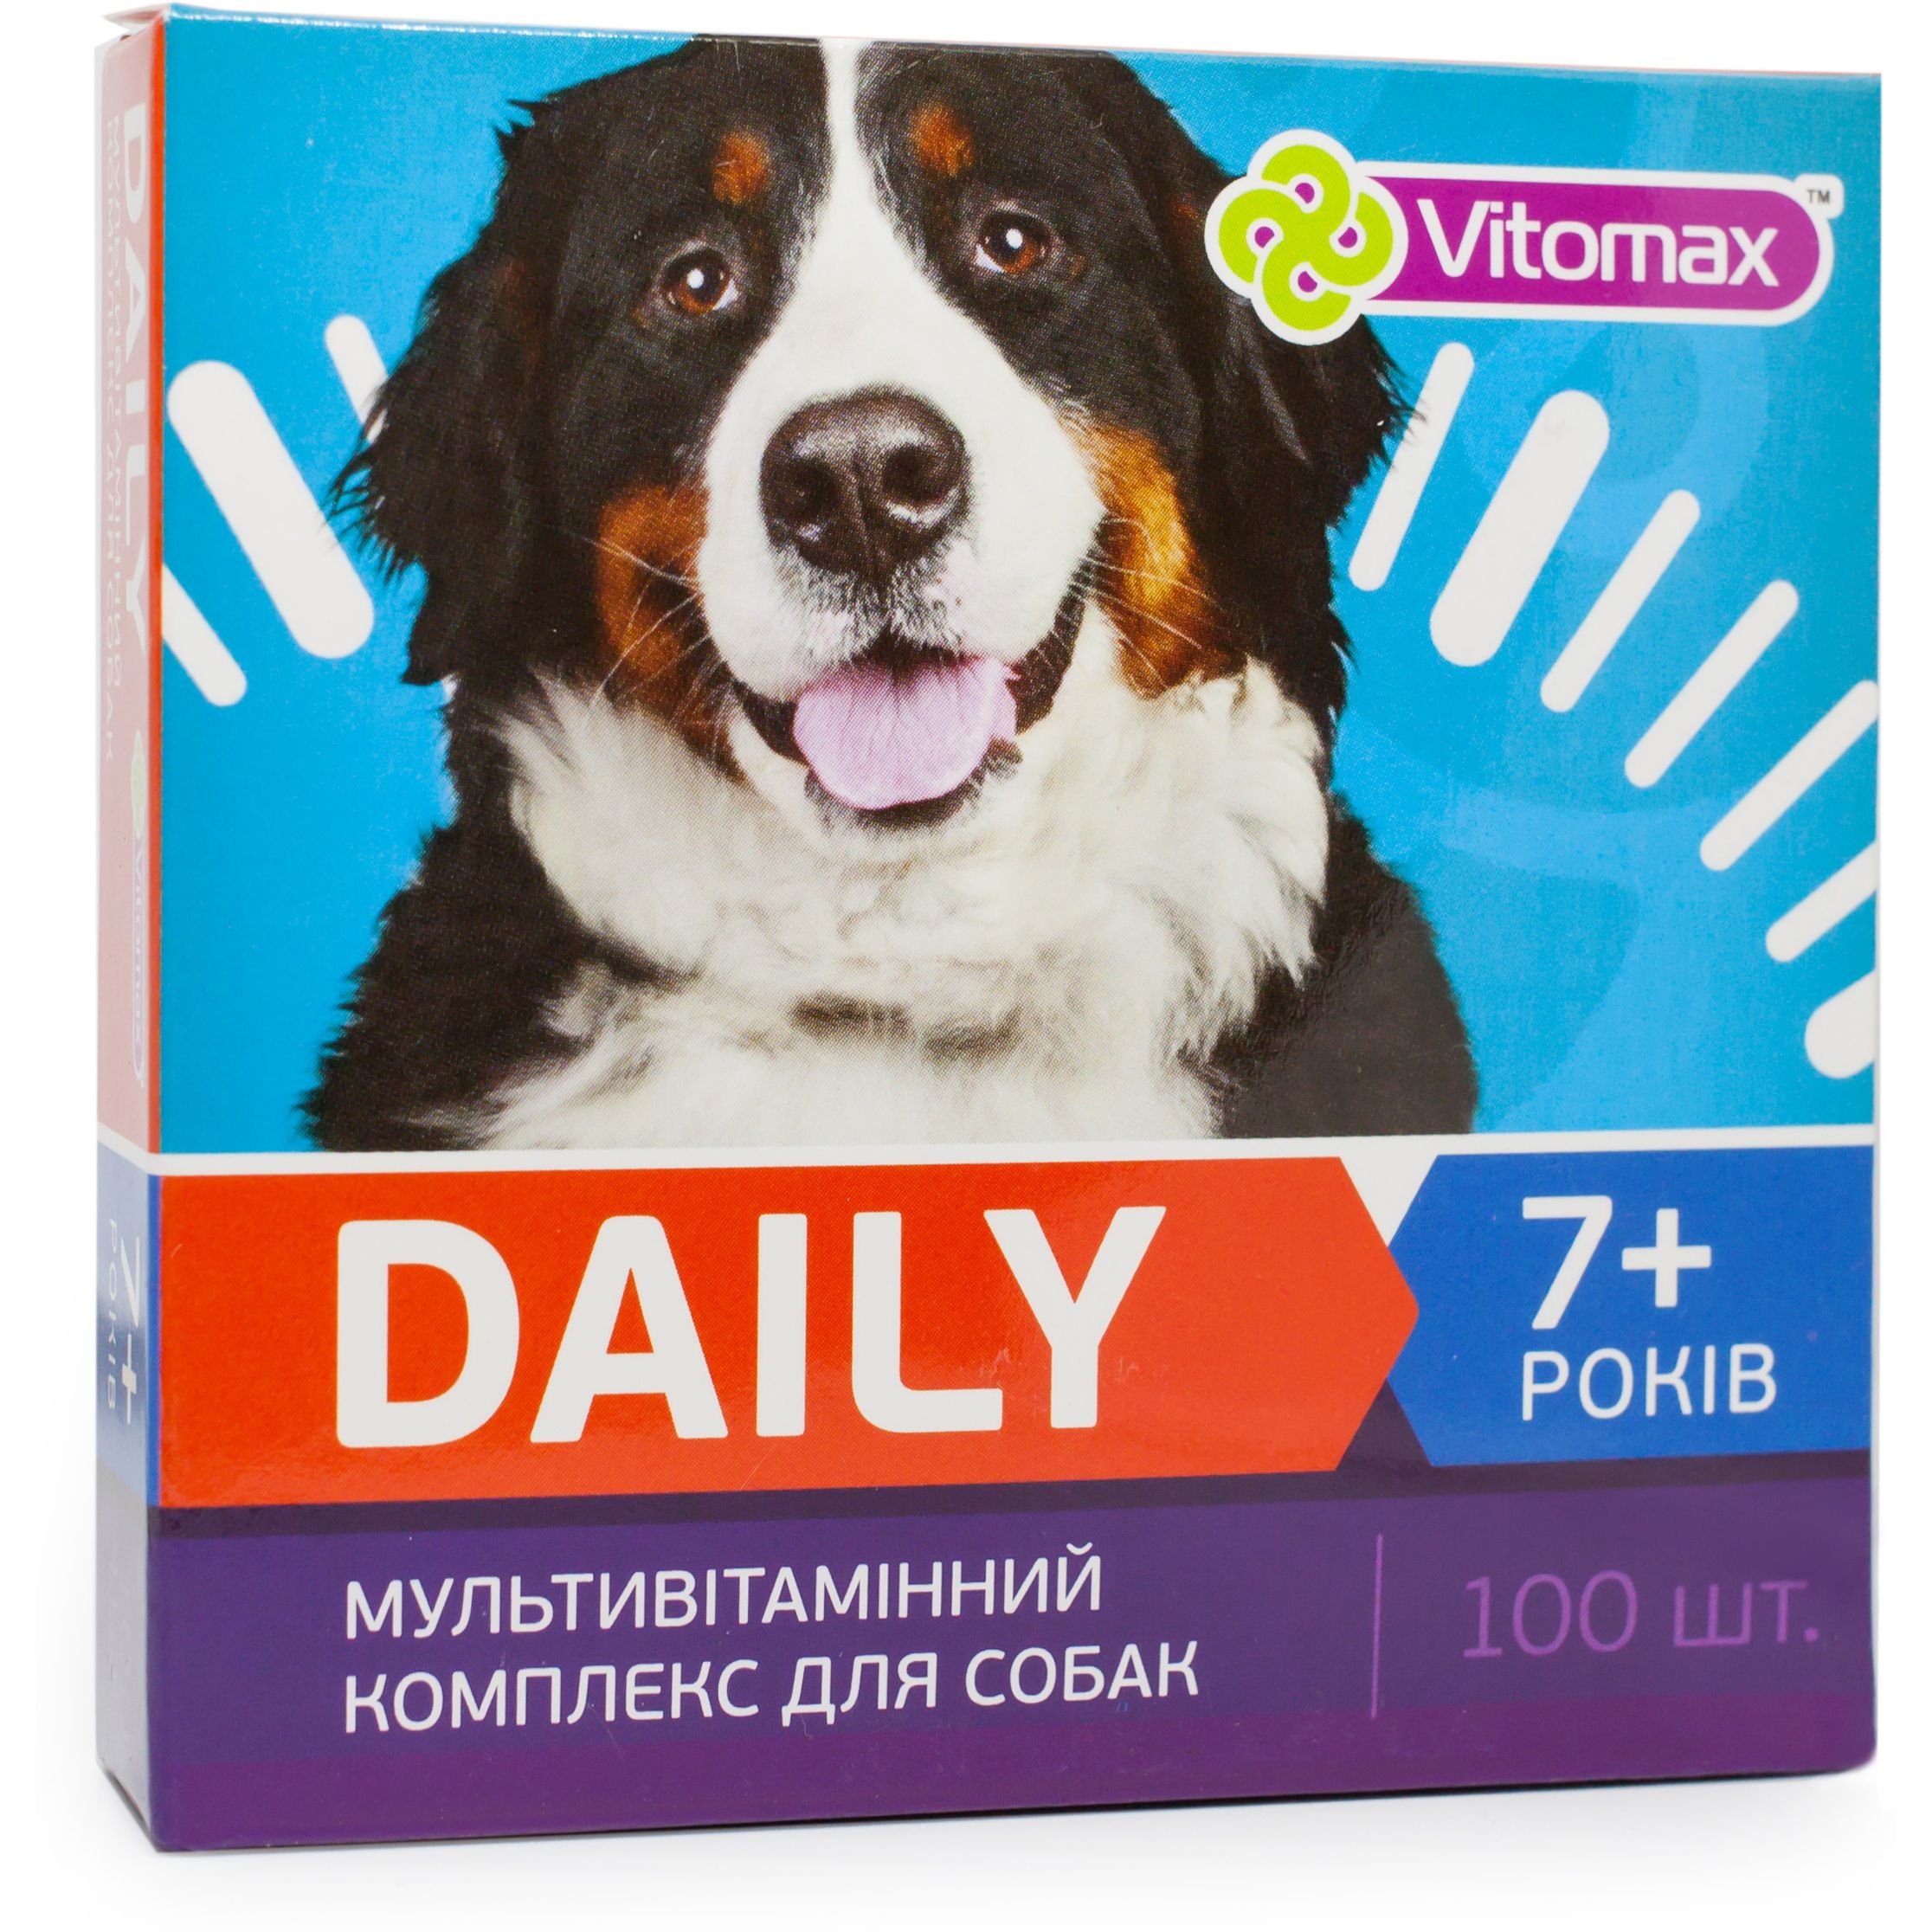 Мультивитаминный комплекс Vitomax Daily для собак 7+ лет, 100 таблеток - фото 1